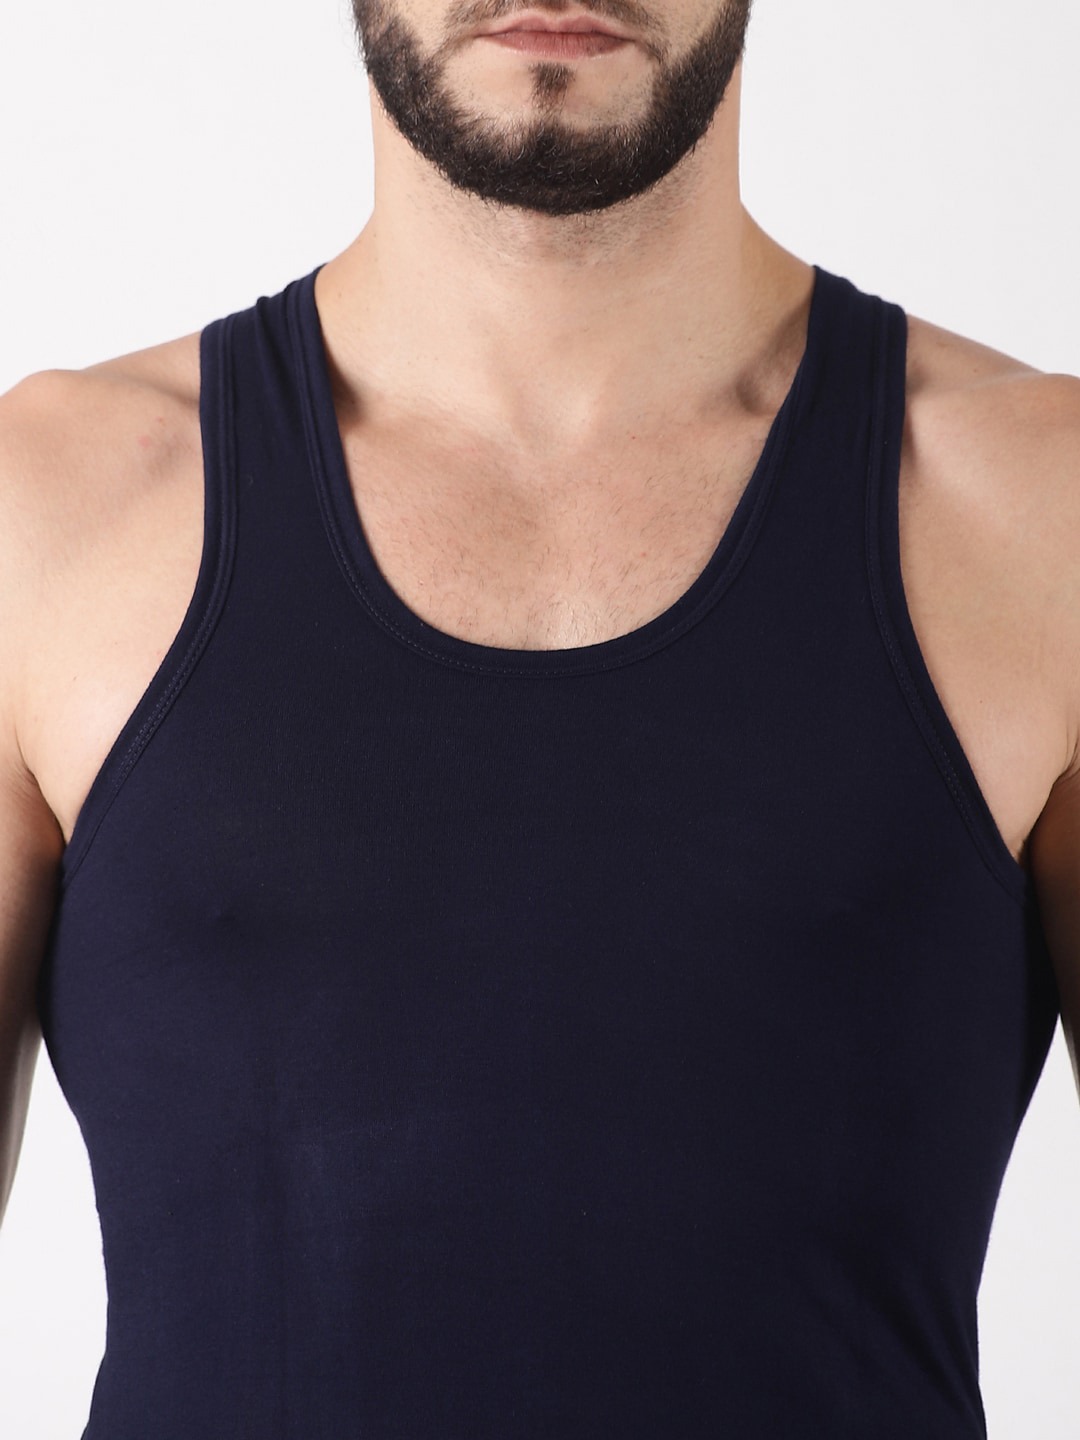 Clothing Innerwear Vests | Dollar Lehar Men Pack Of 3 Assorted Innerwear Vest MLHVE-01-PO3-ASST1 - JU44780